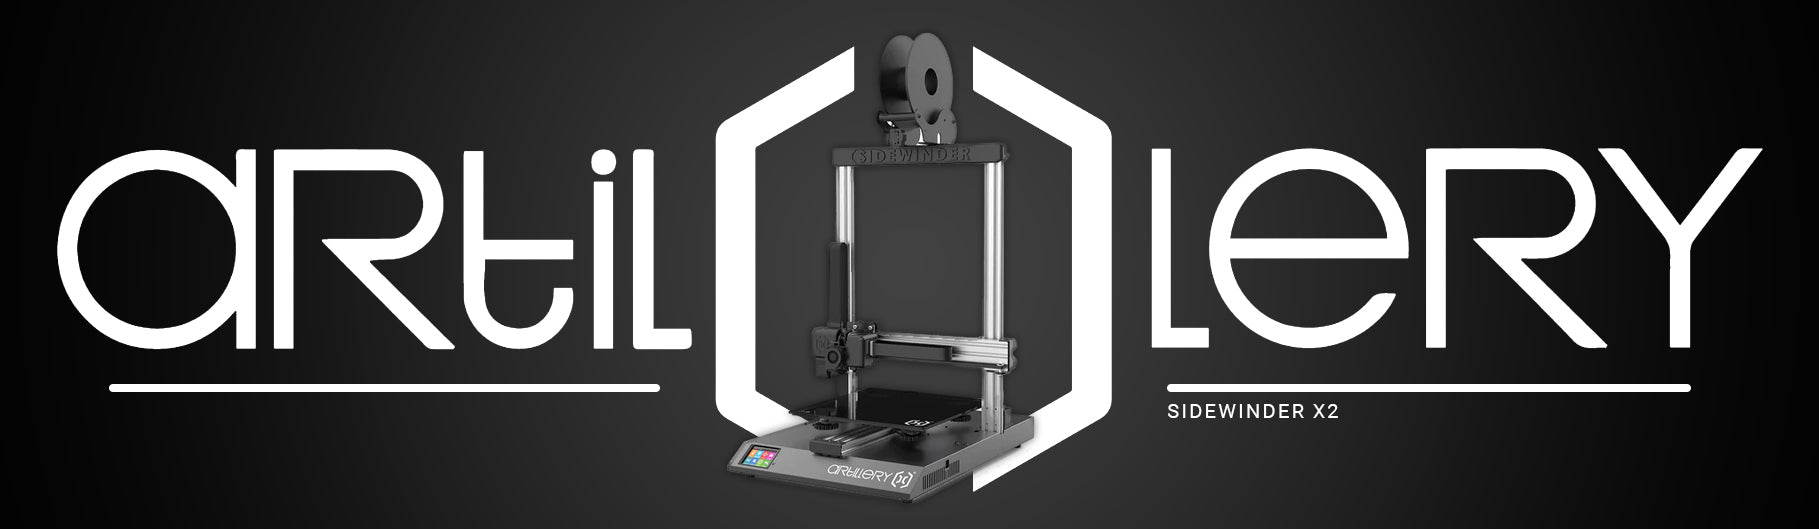 imprimantes 3D filament fabrication additive artillery